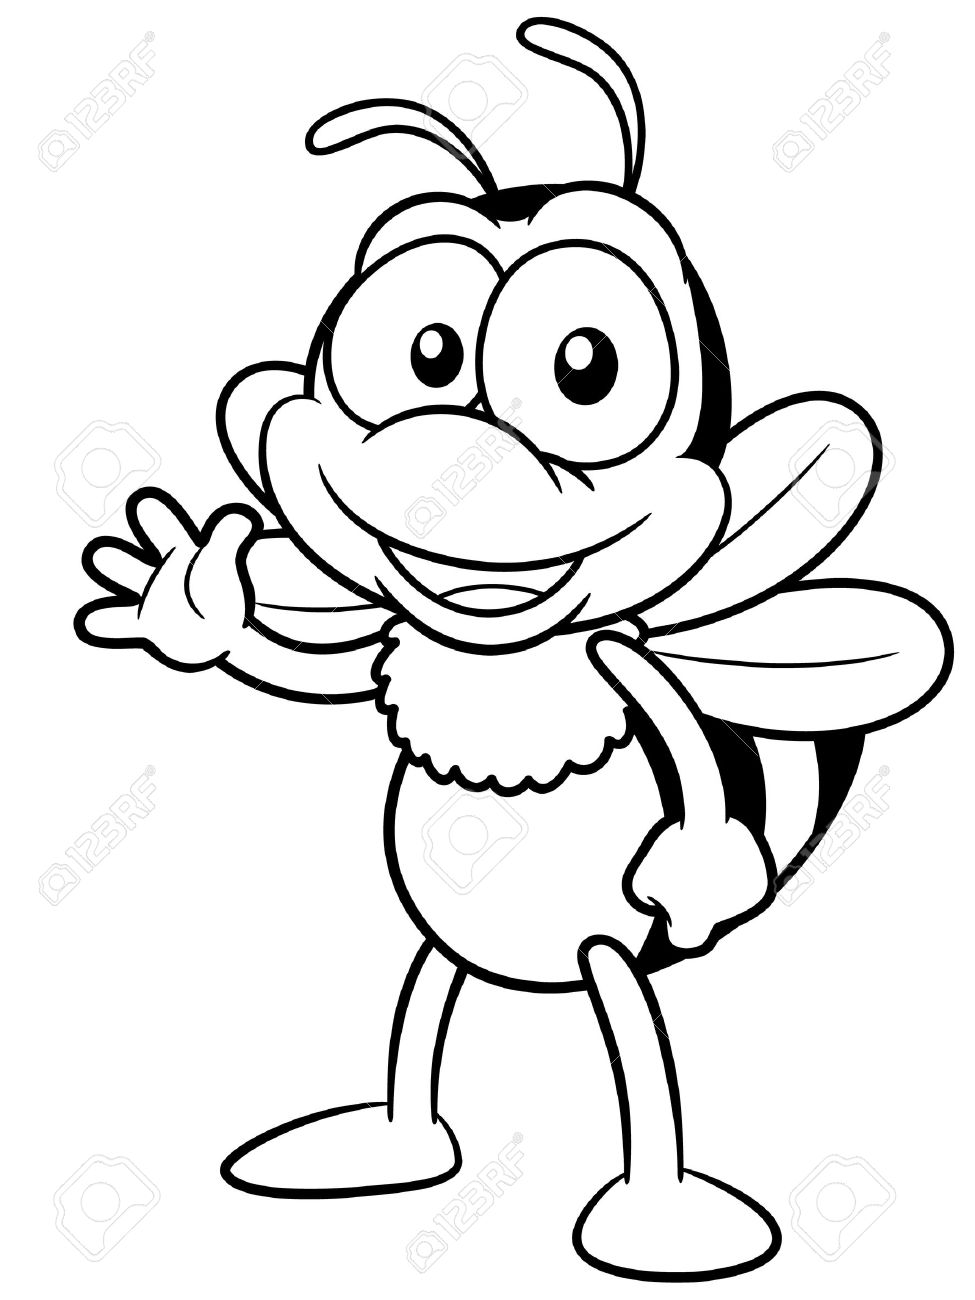 1571359405-17813670-illustration-of-cartoon-bee-coloring-book-para